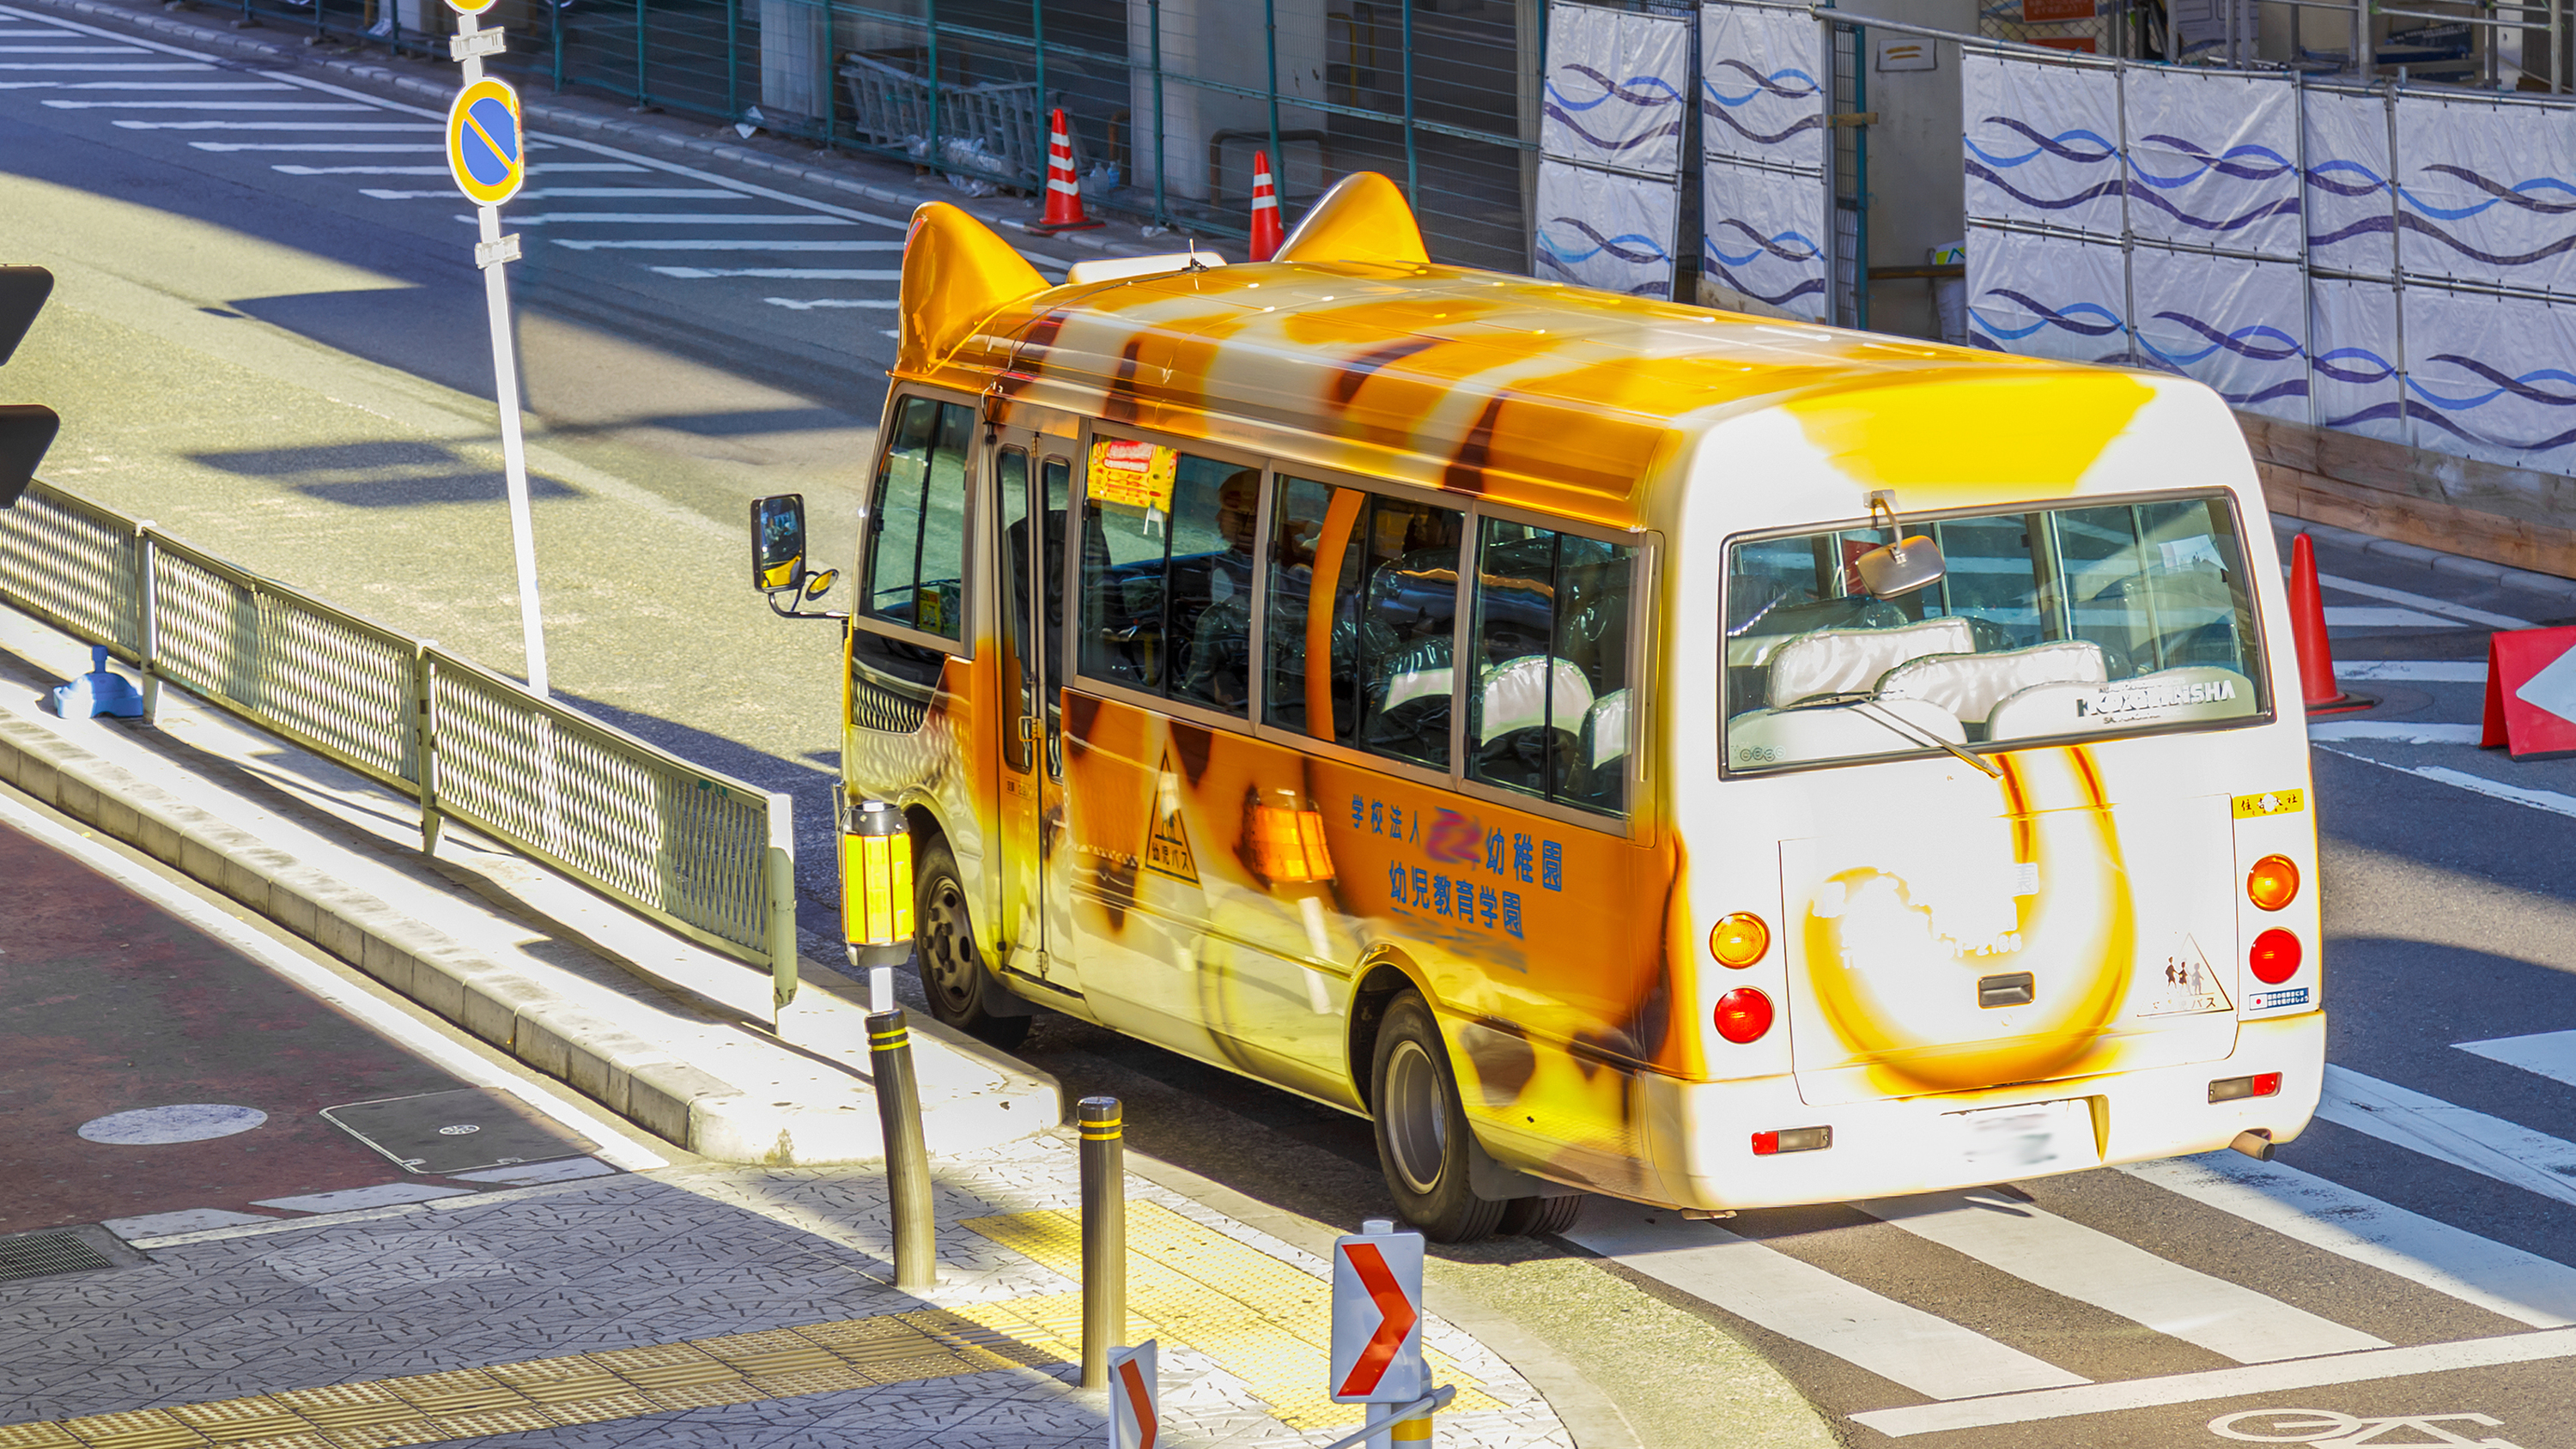 Japan has the most adorable anime- and animal-themed kindergarten buses